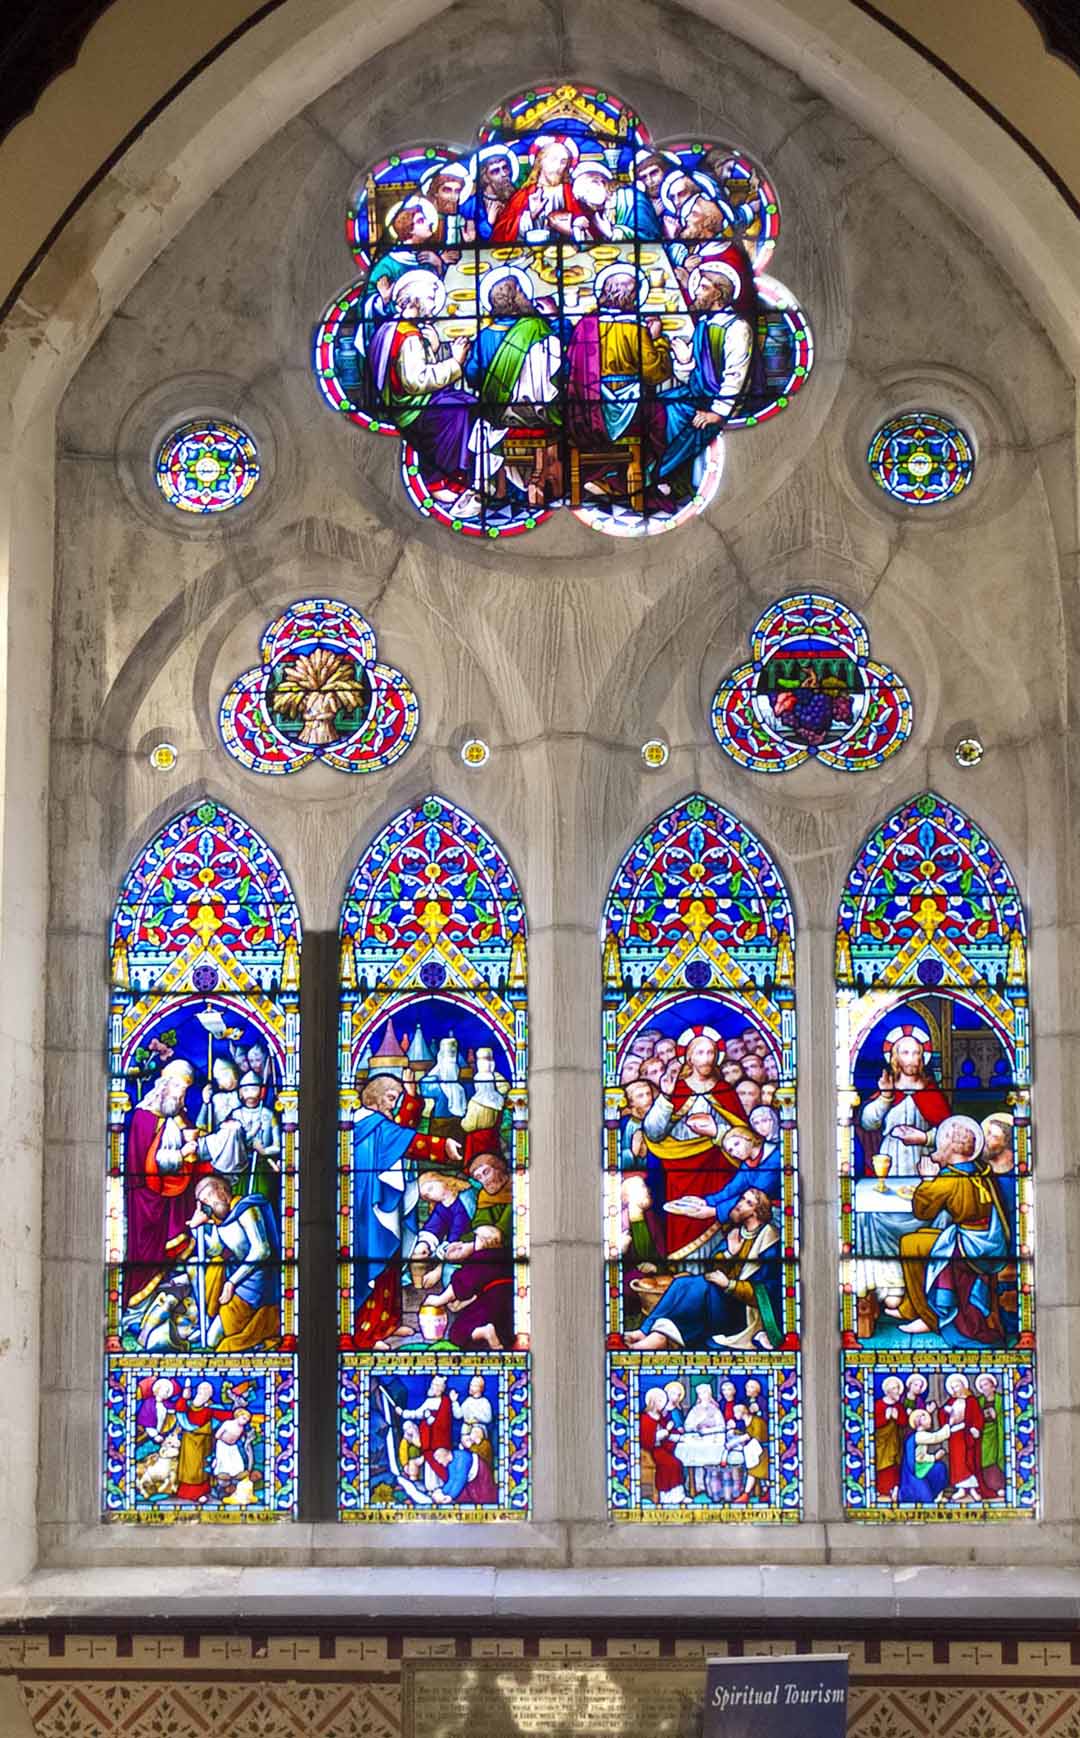 Showing the windows of St Mary's Church Killarney.